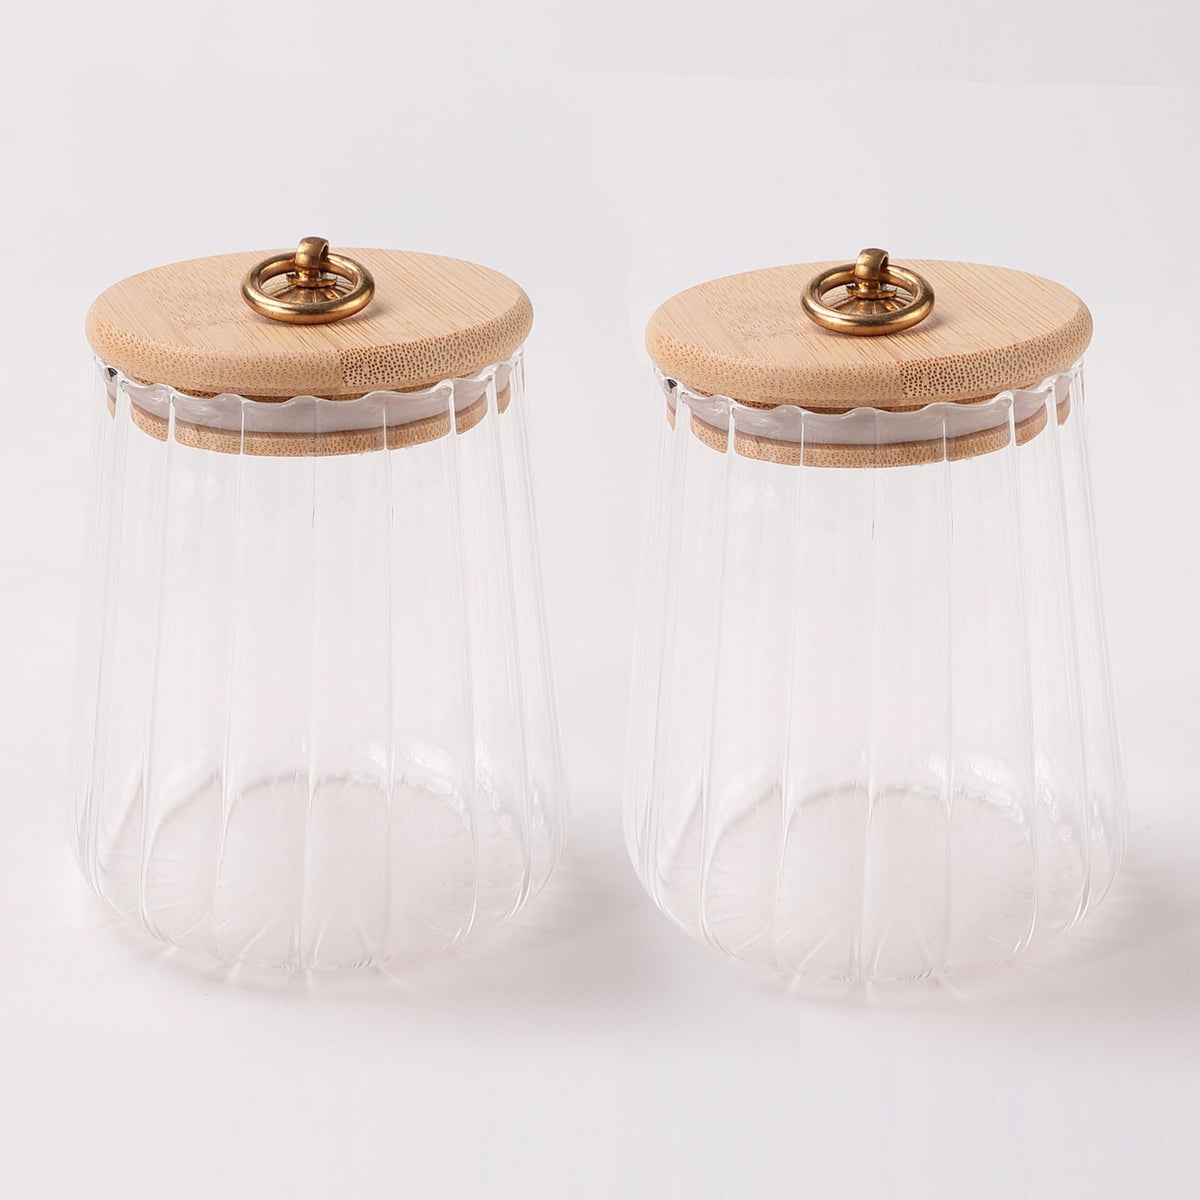 UMAI Borosilicate Glass Jar with Bamboo Lid | Kitchen Organizer Items and Storage | Multi-utility, Leakproof, Airtight Storage Jar for Cookies, Snacks, Tea, Coffee, Sugar | Set of 2 (750ml)